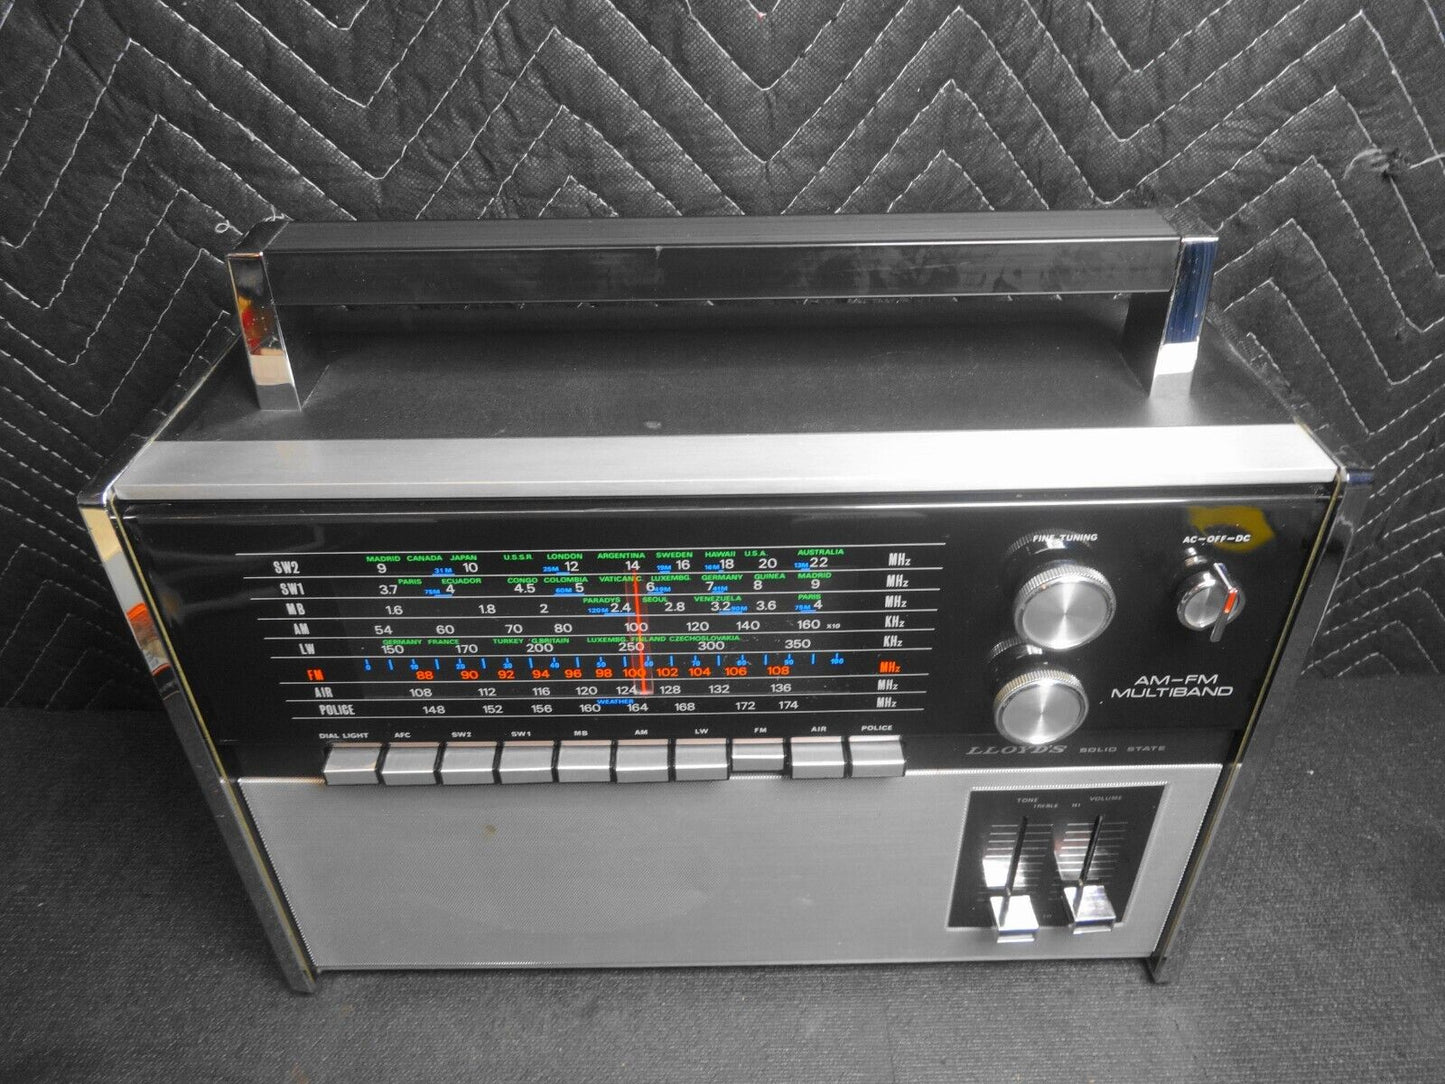 VINTAGE LLOYDS N632B MULTIBAND PORTABLE (1970) SHORTWAVE RADIO BOOMBOX SERVICED!